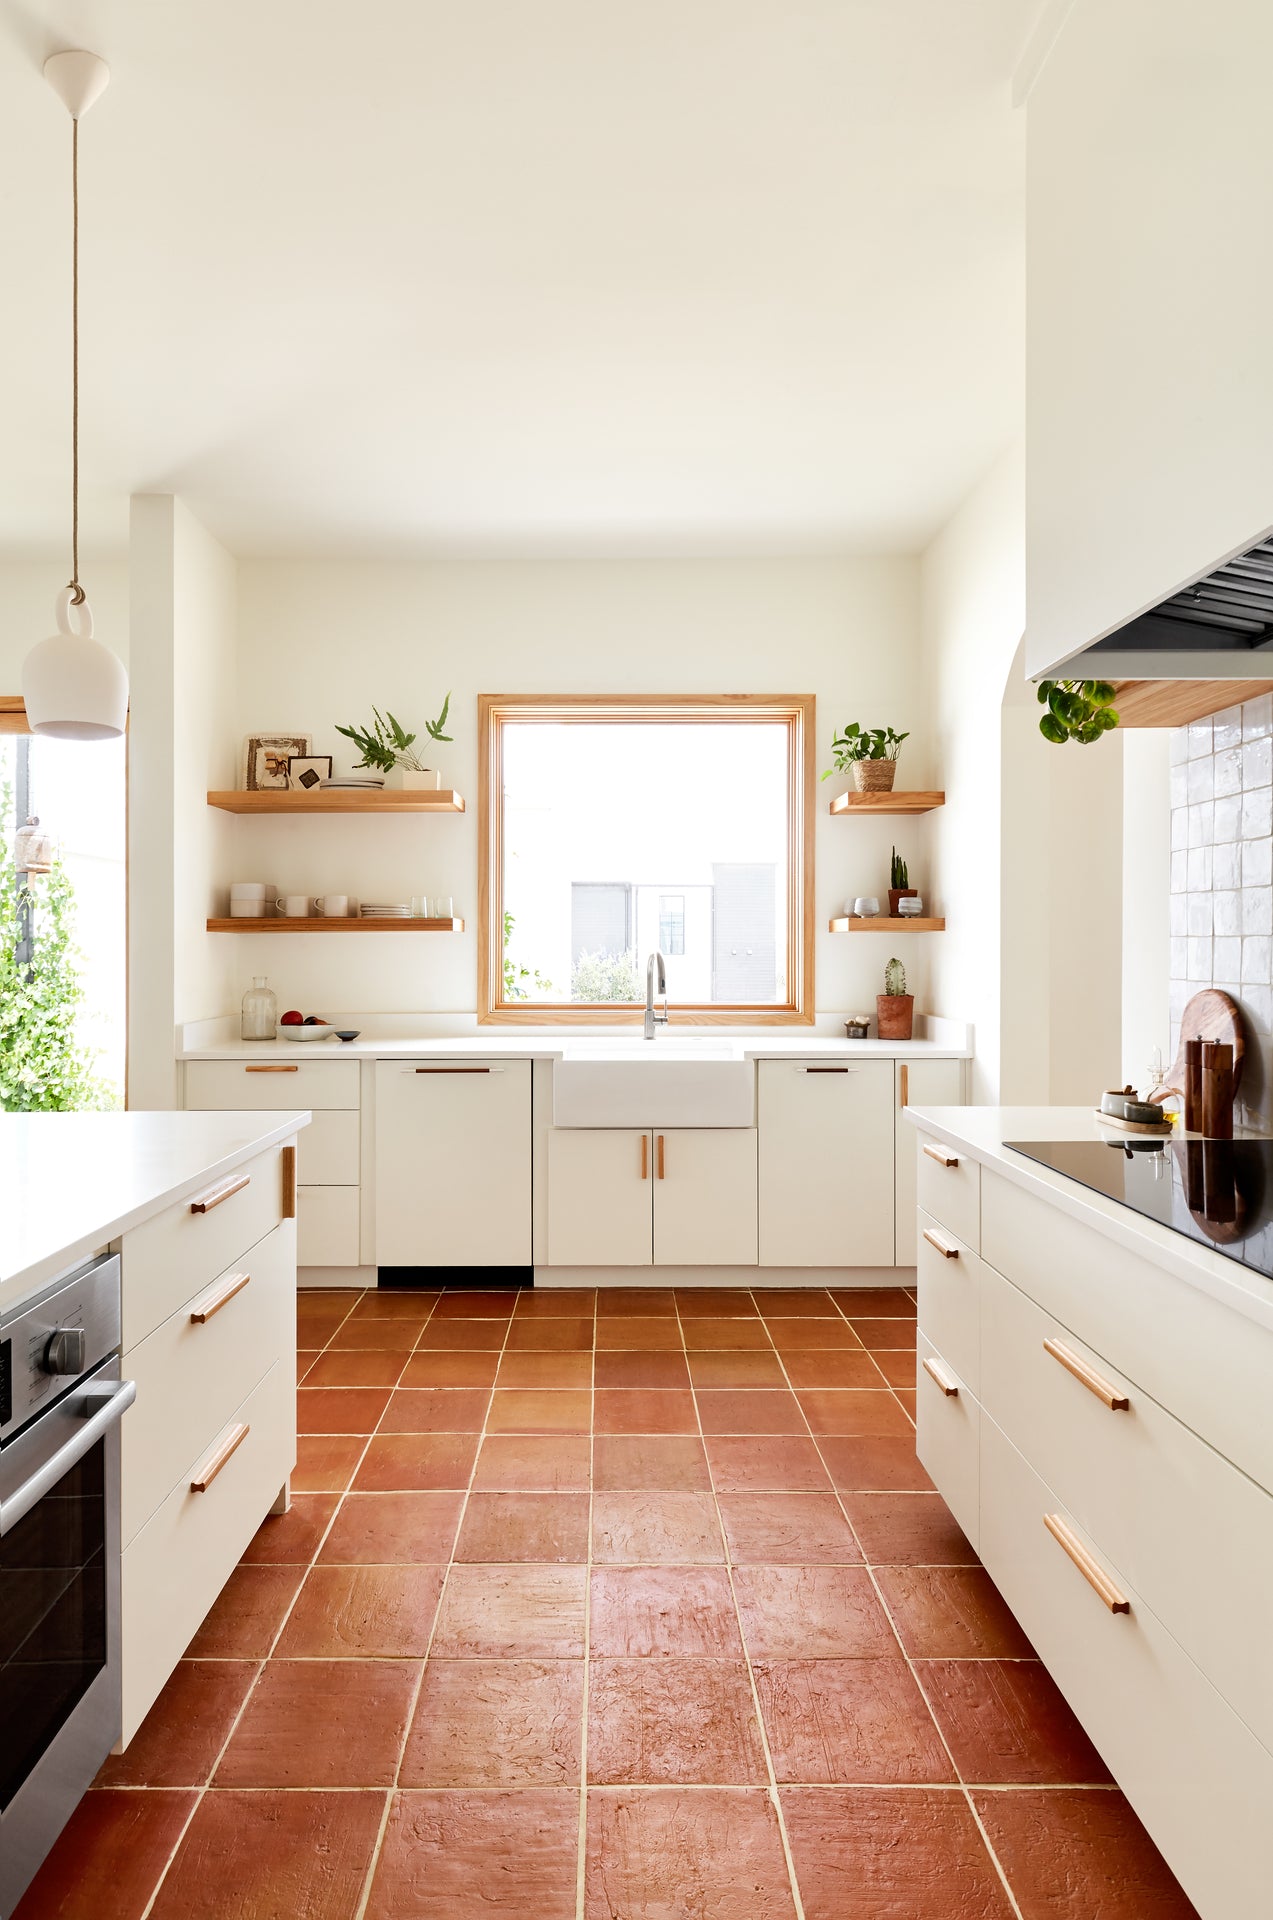 Modern kitchen design with terracotta tiles